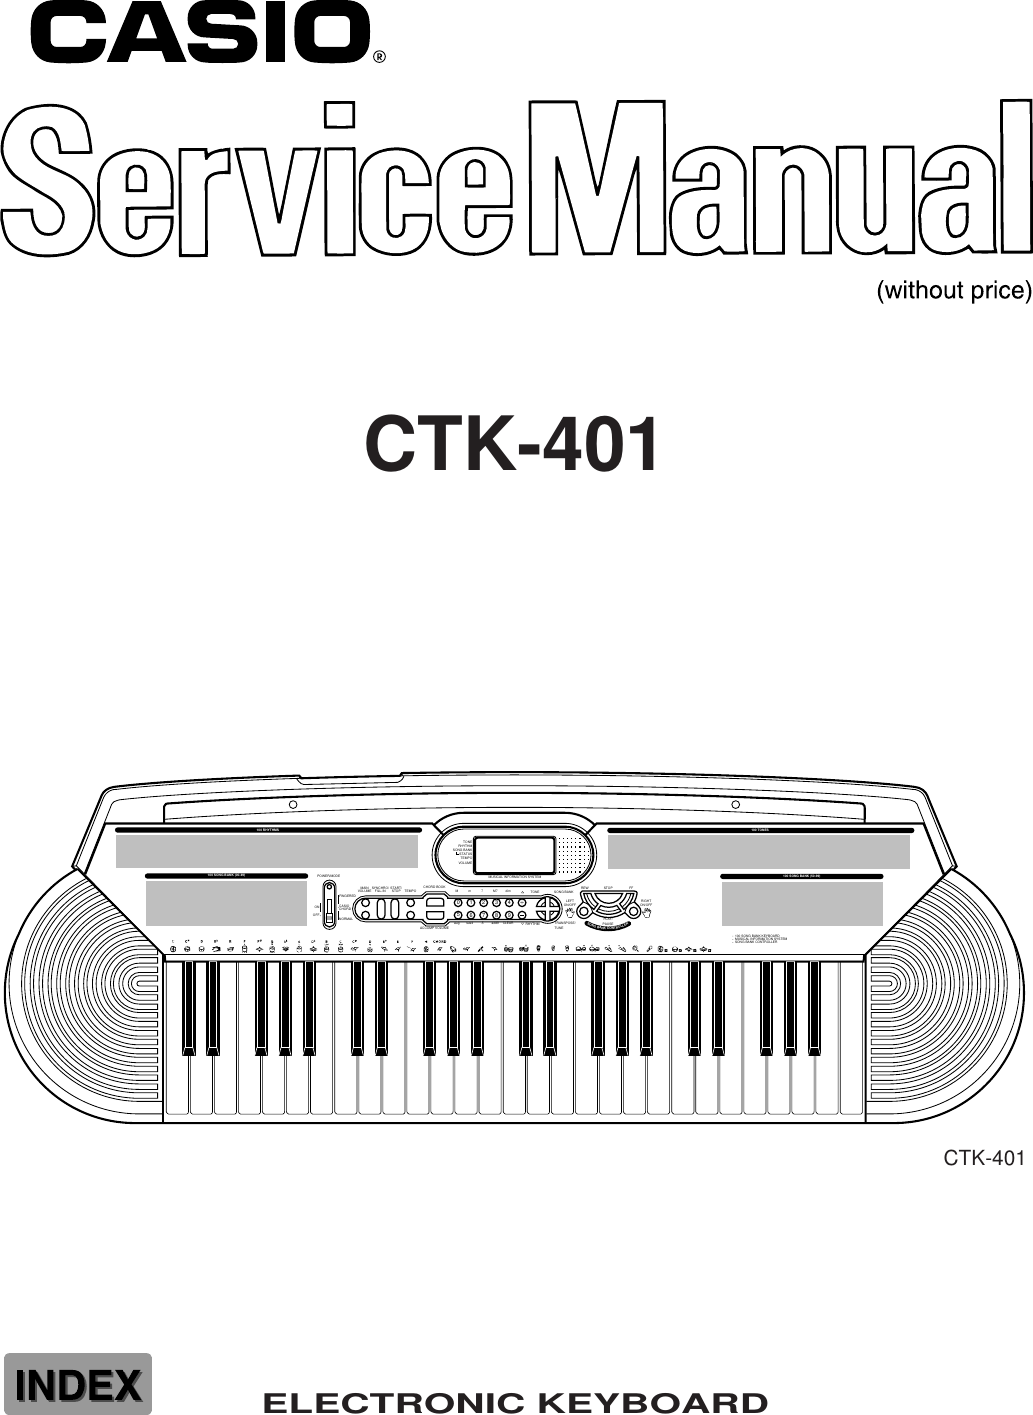 casio ctk-401 users manual frree download